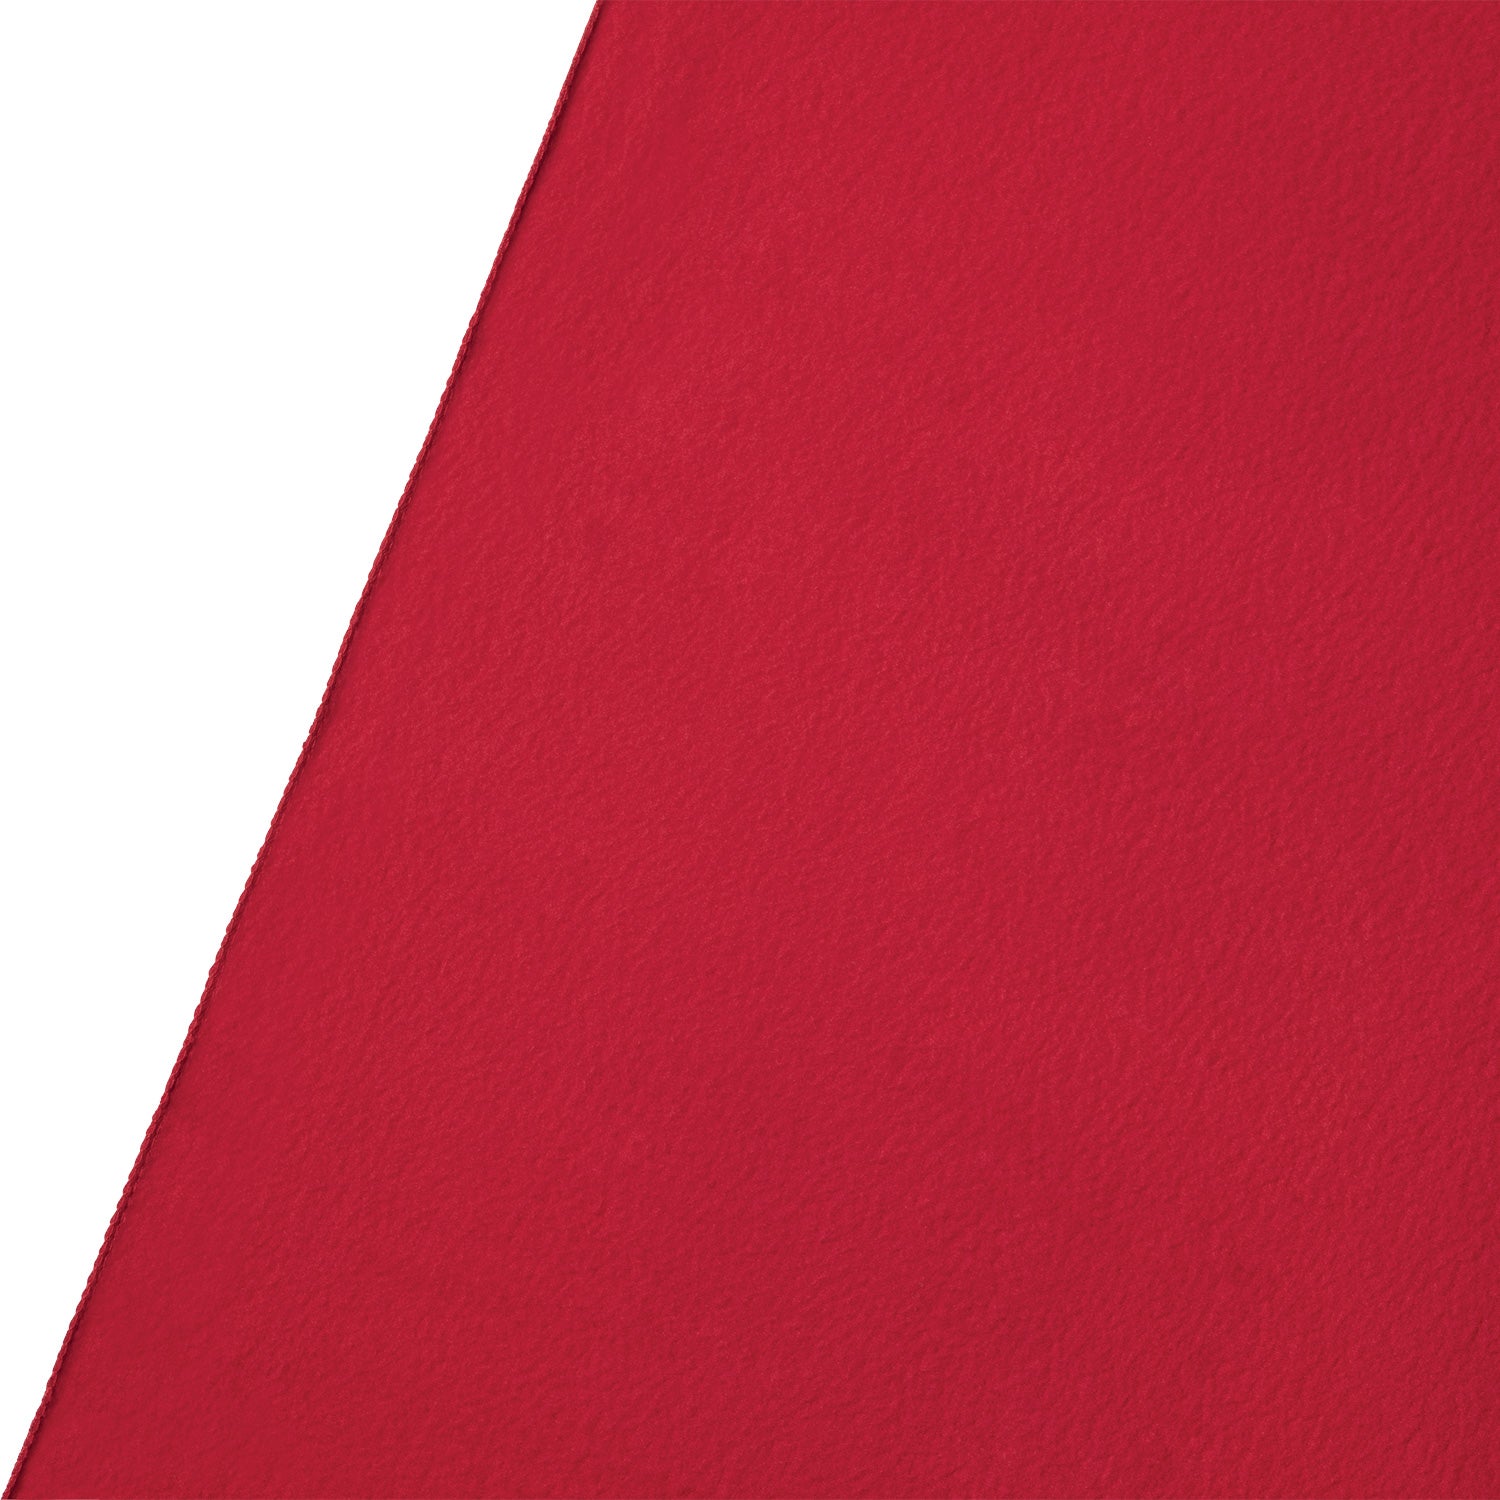 X-Drop Pro Wrinkle-Resistant Backdrop - Scarlet Red (8' x 8')